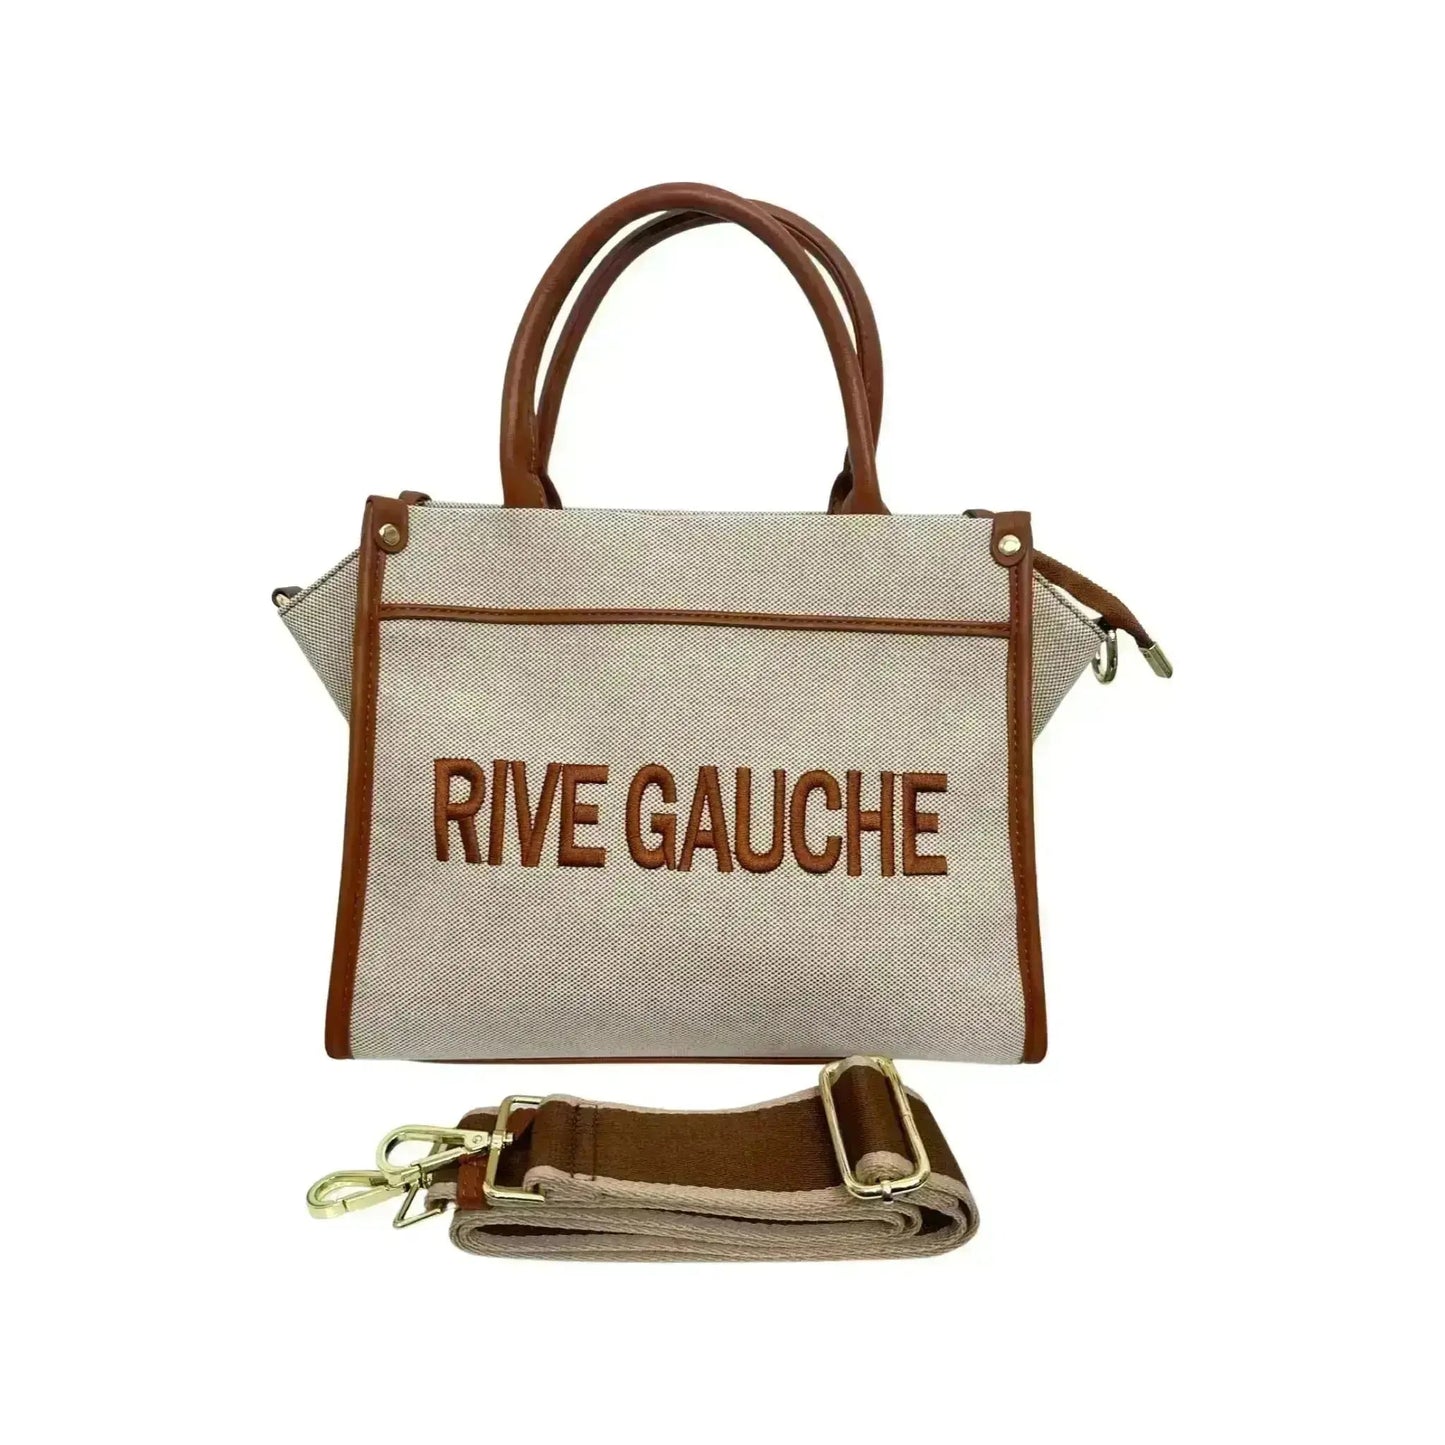 Rive Gauche Tasche Ecru Braun - KNOCKNOK Fashion